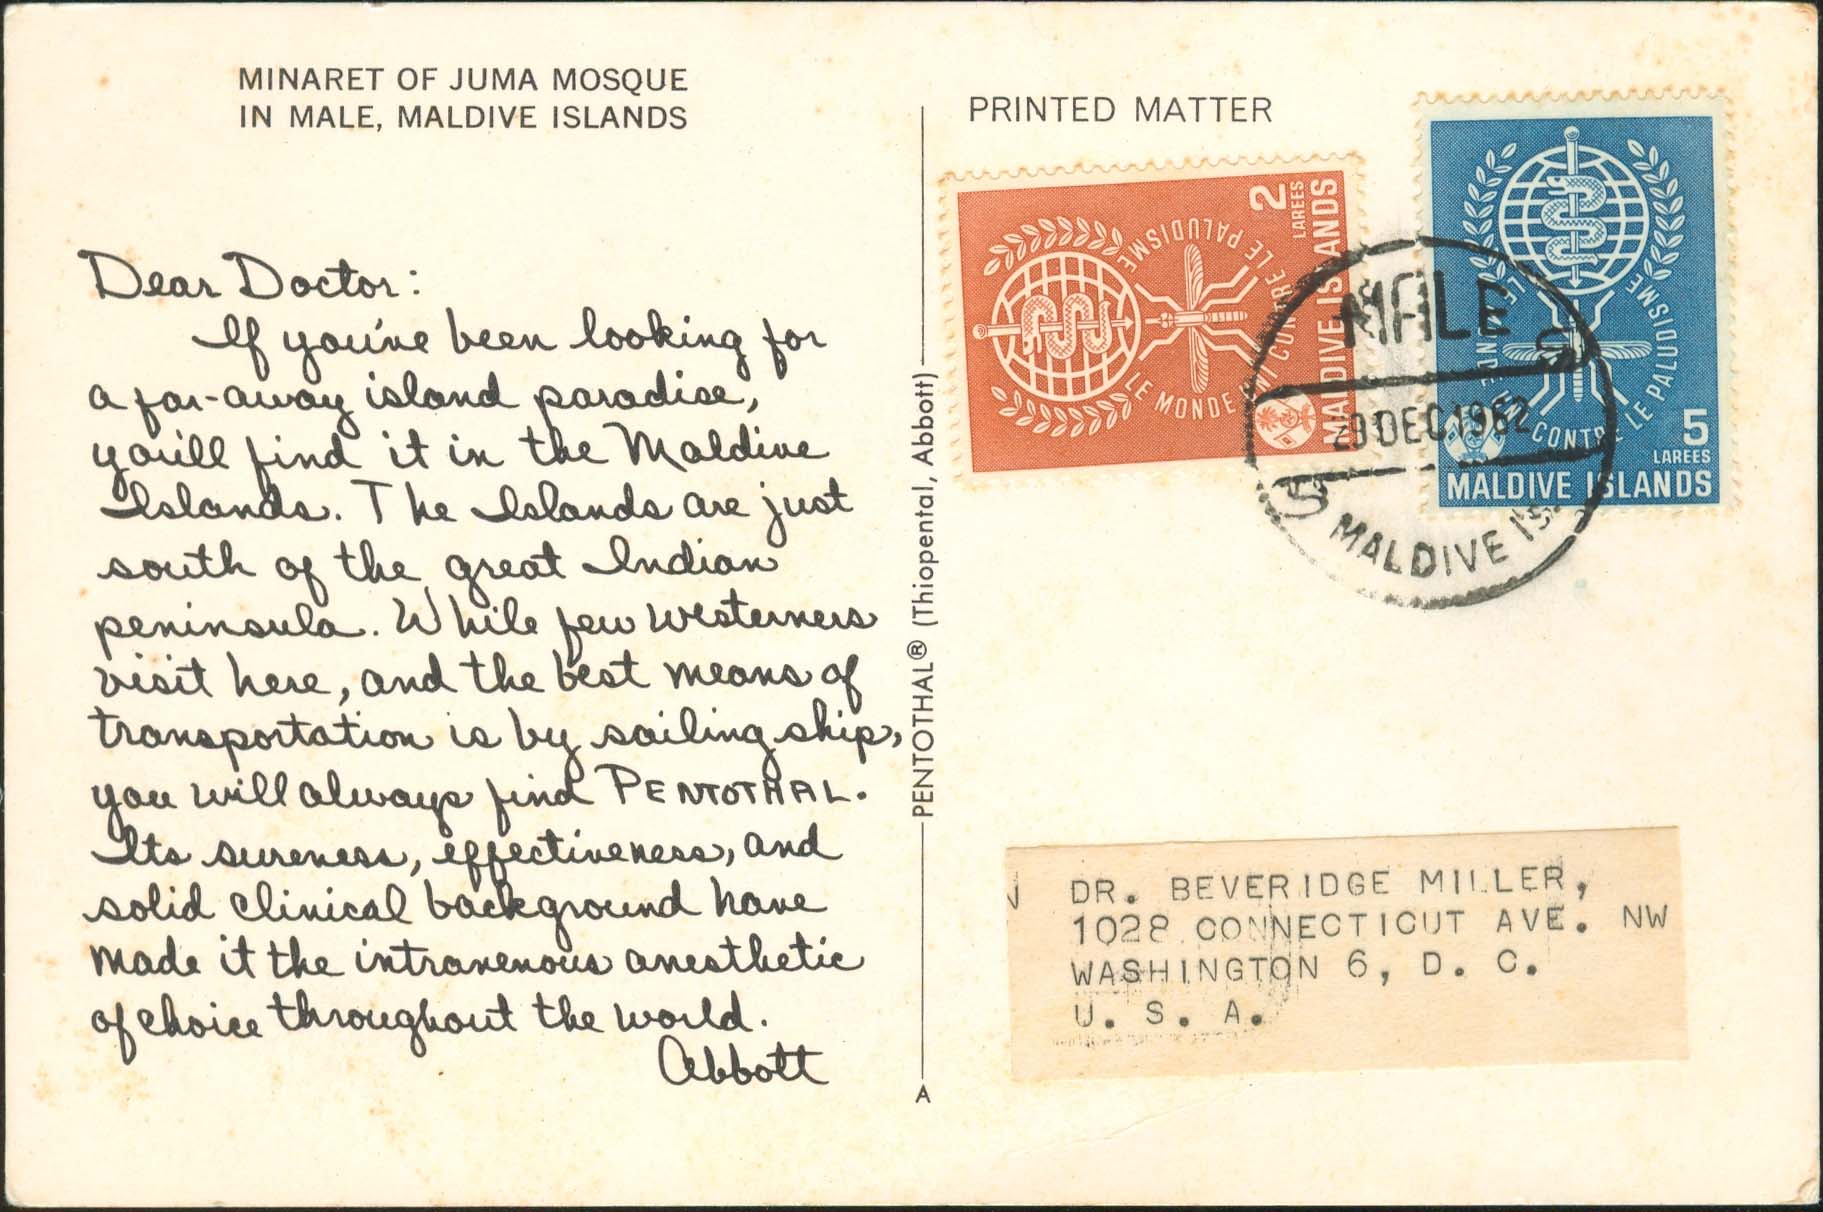 Dear Doctor Postcard - Type A - United States - 1962, Dec 29